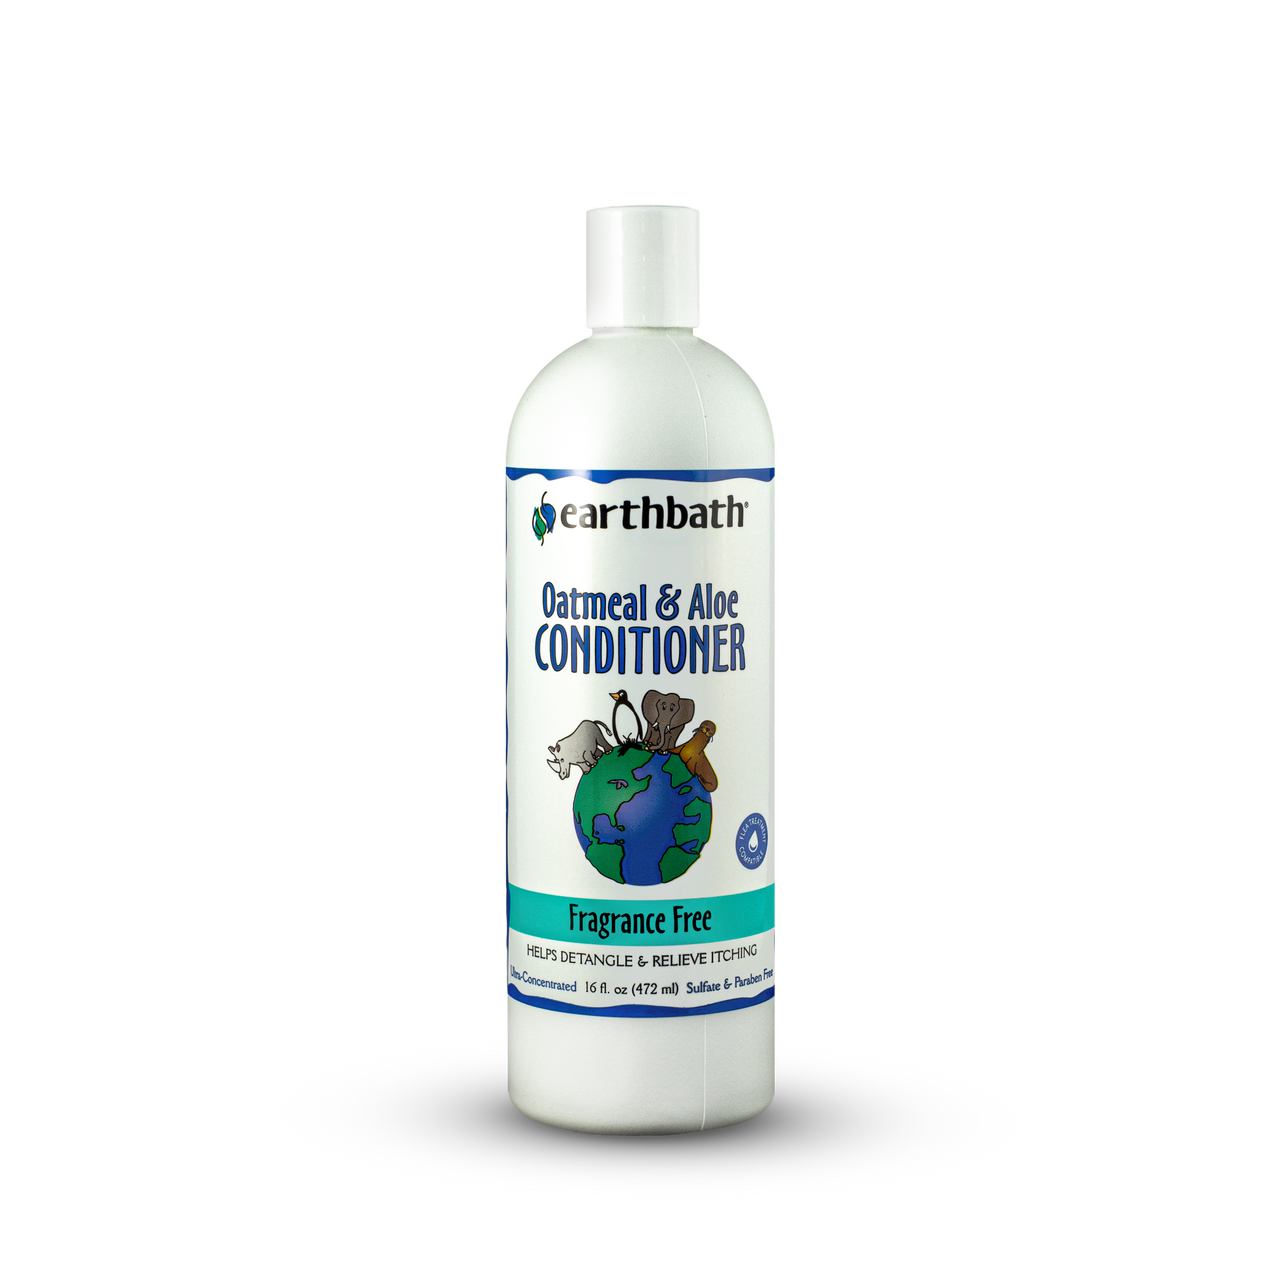 Earthbath Oatmeal & Aloe Conditioner, Fragrance Free 16oz